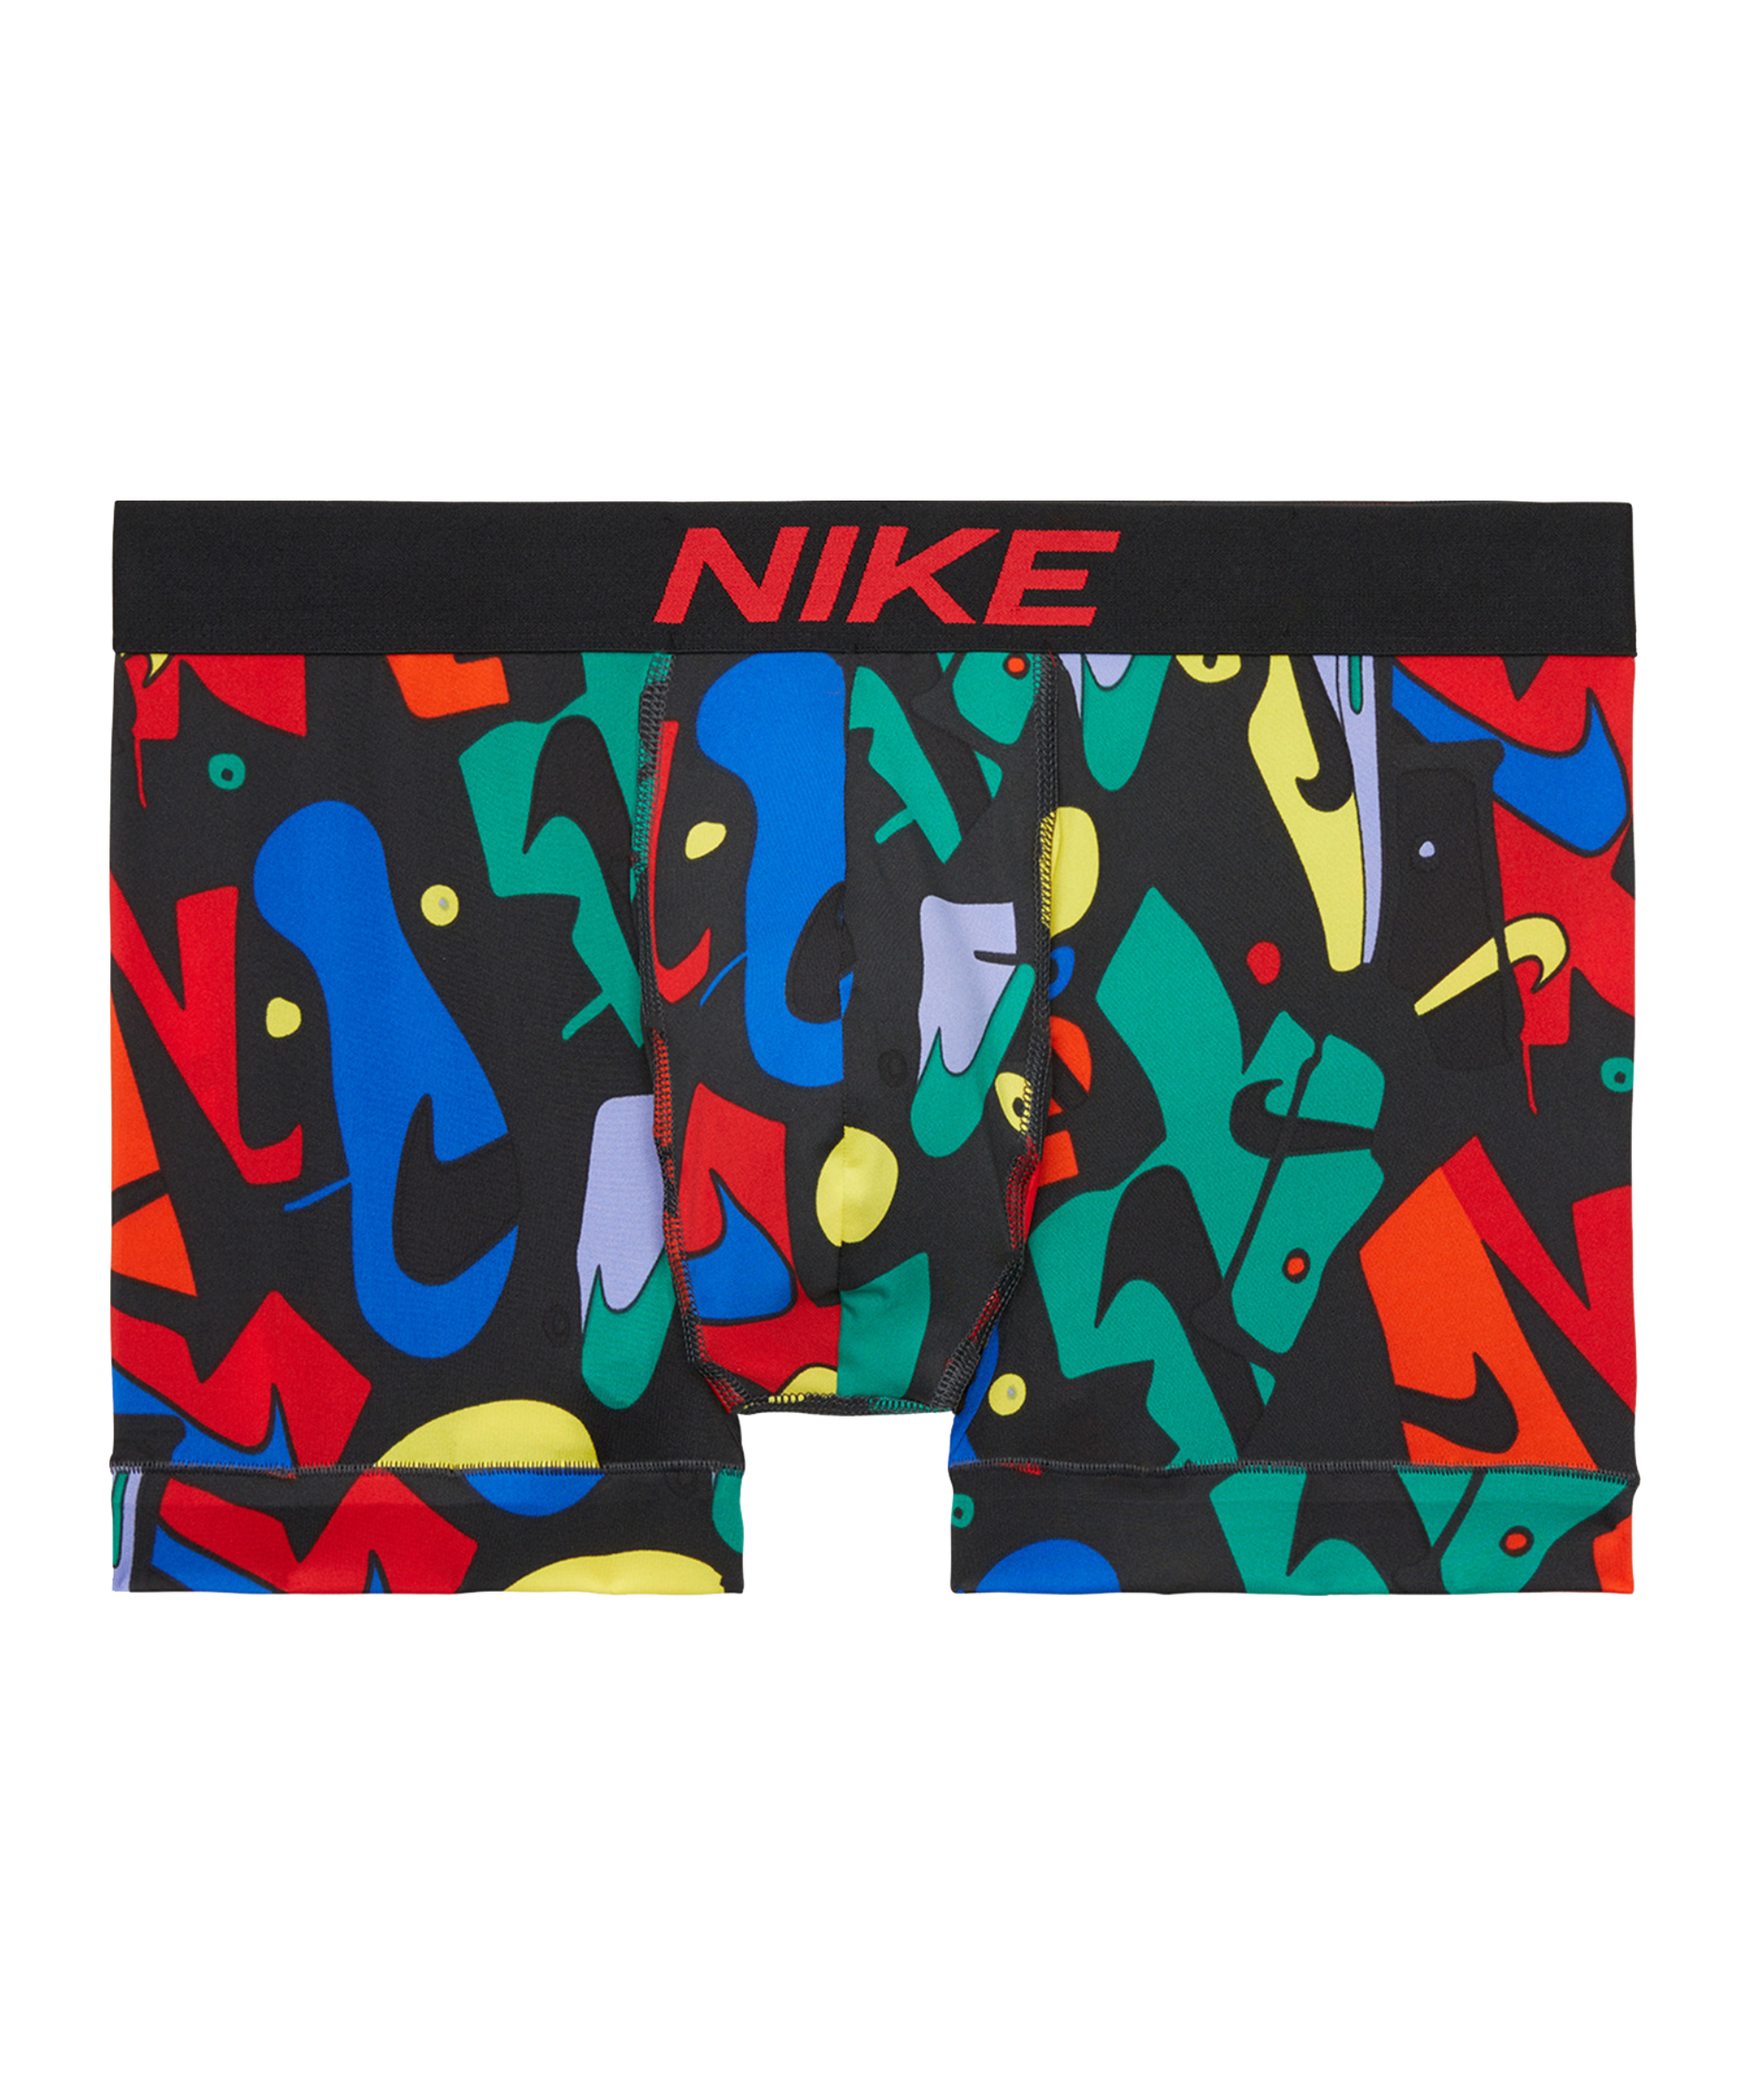 Boxerky Nike Trunk